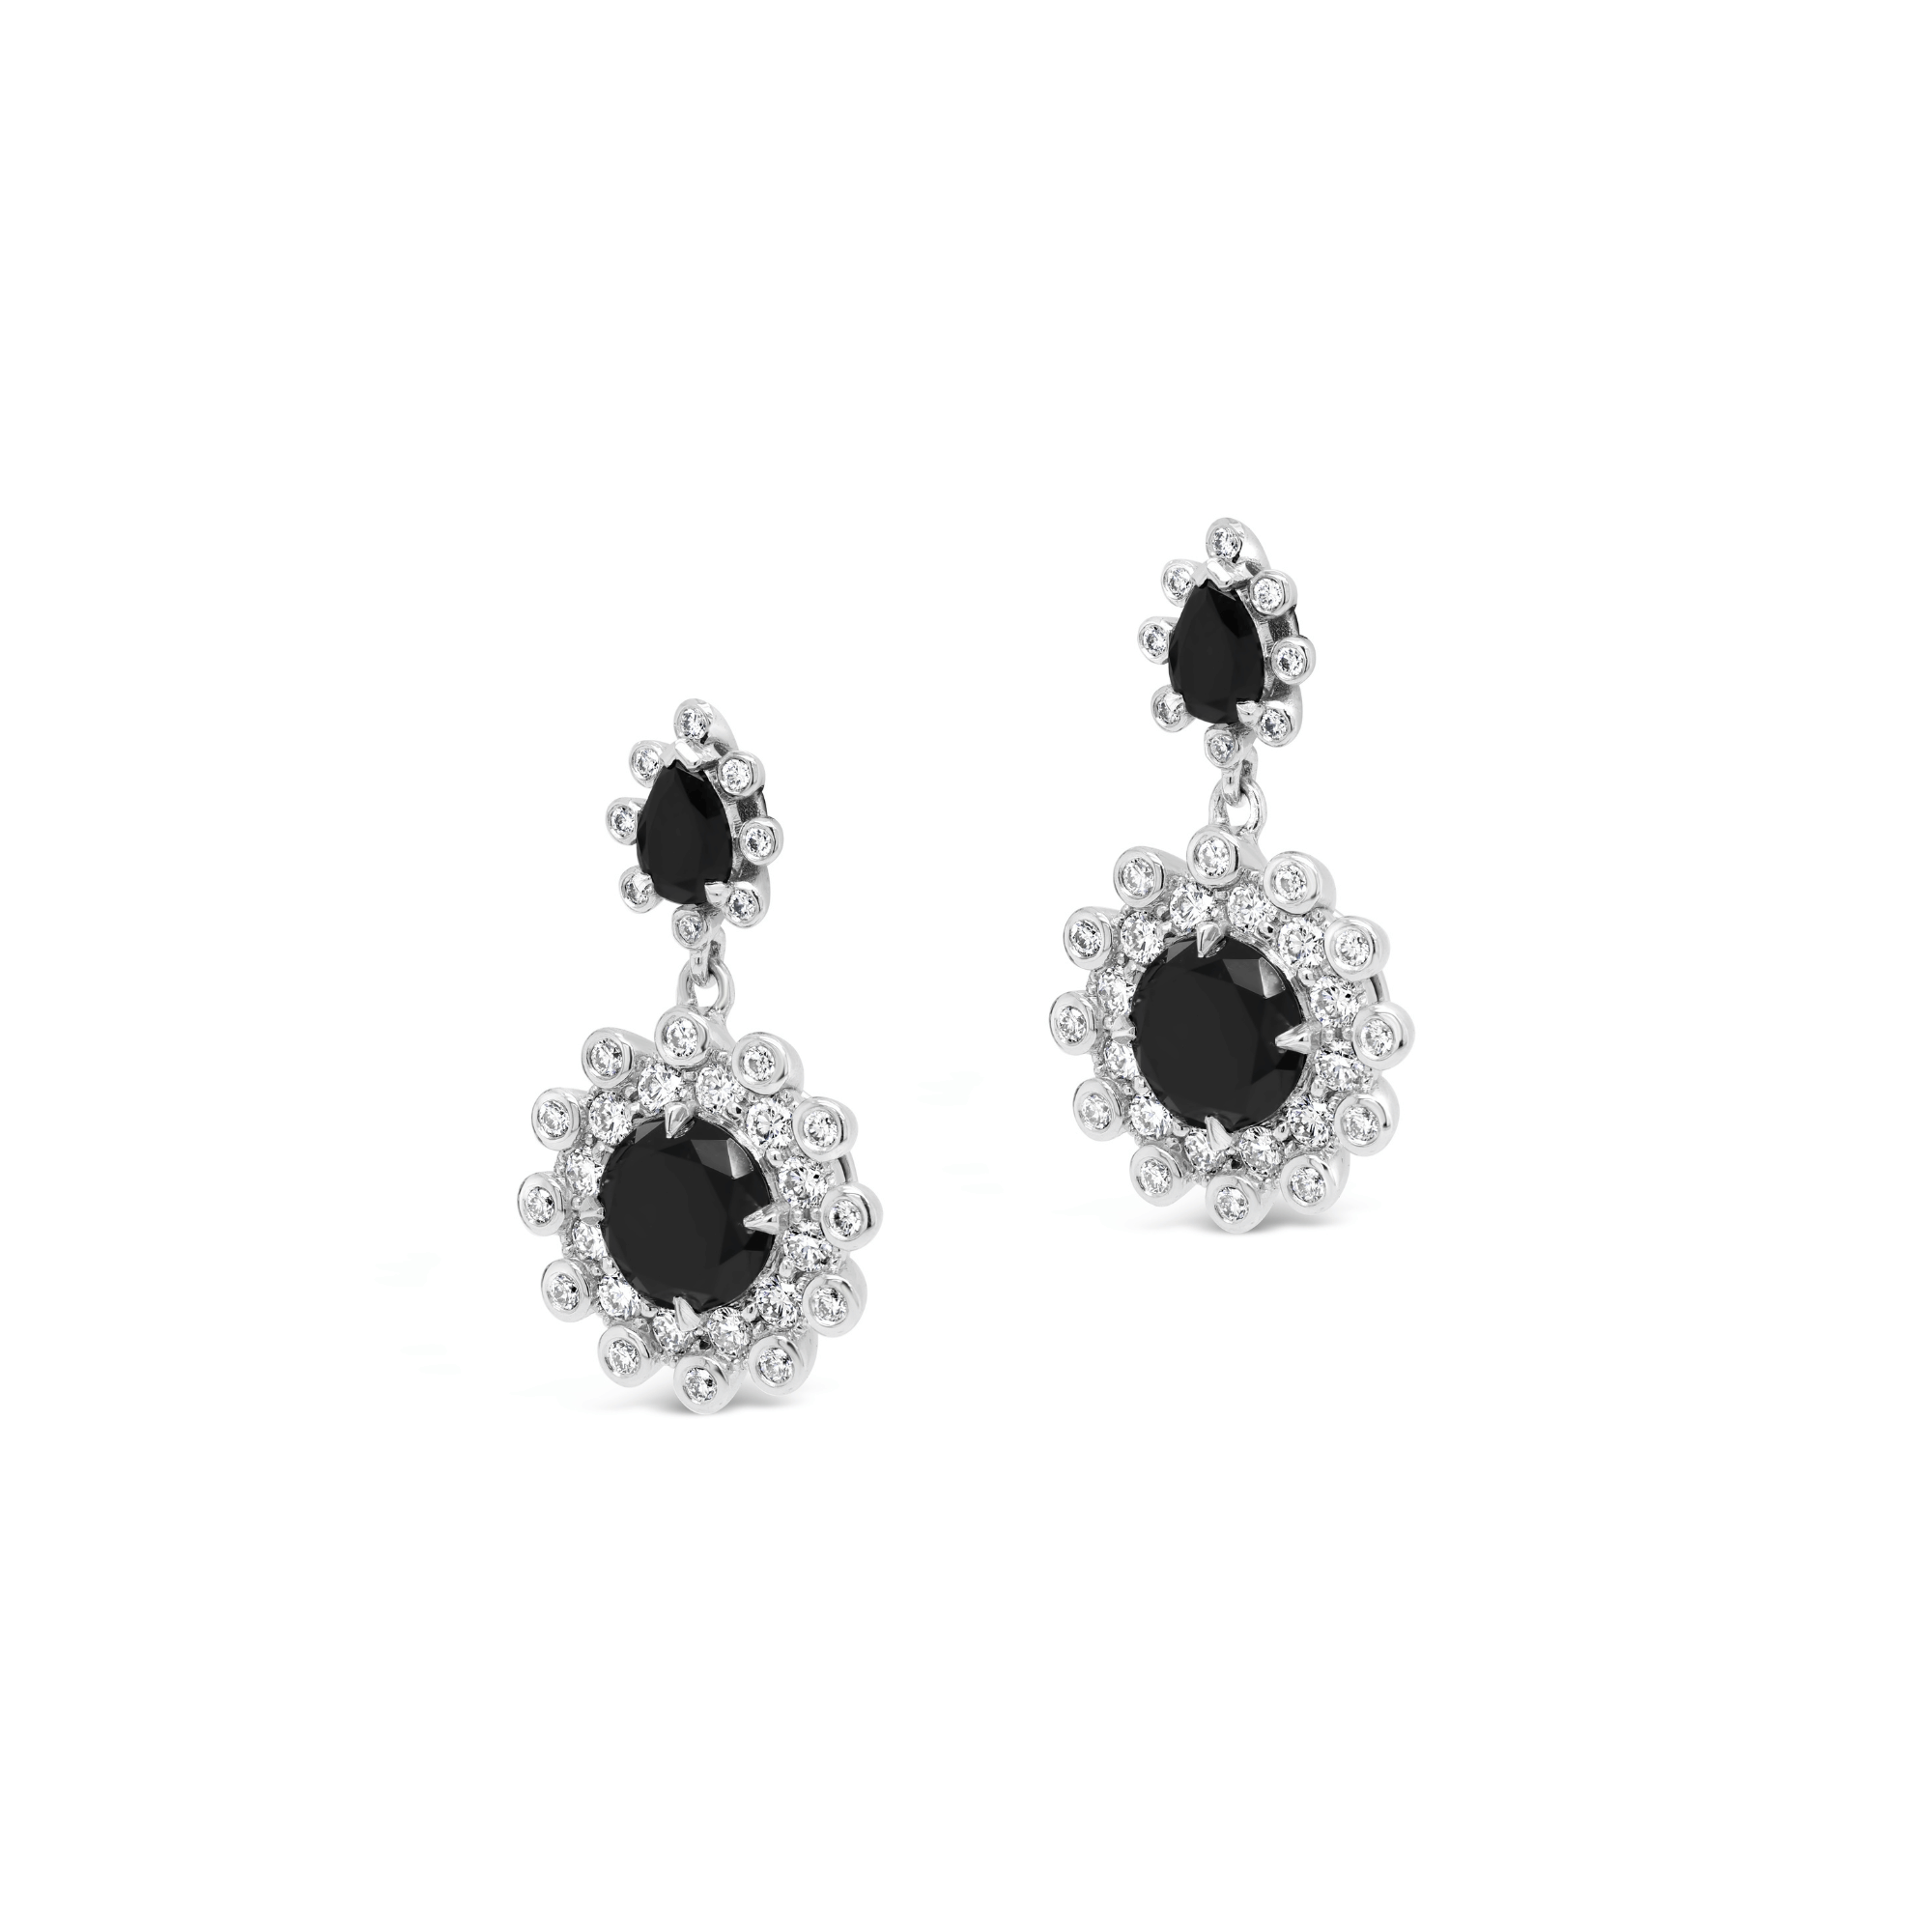 Black diamond and white diamond drop earrings